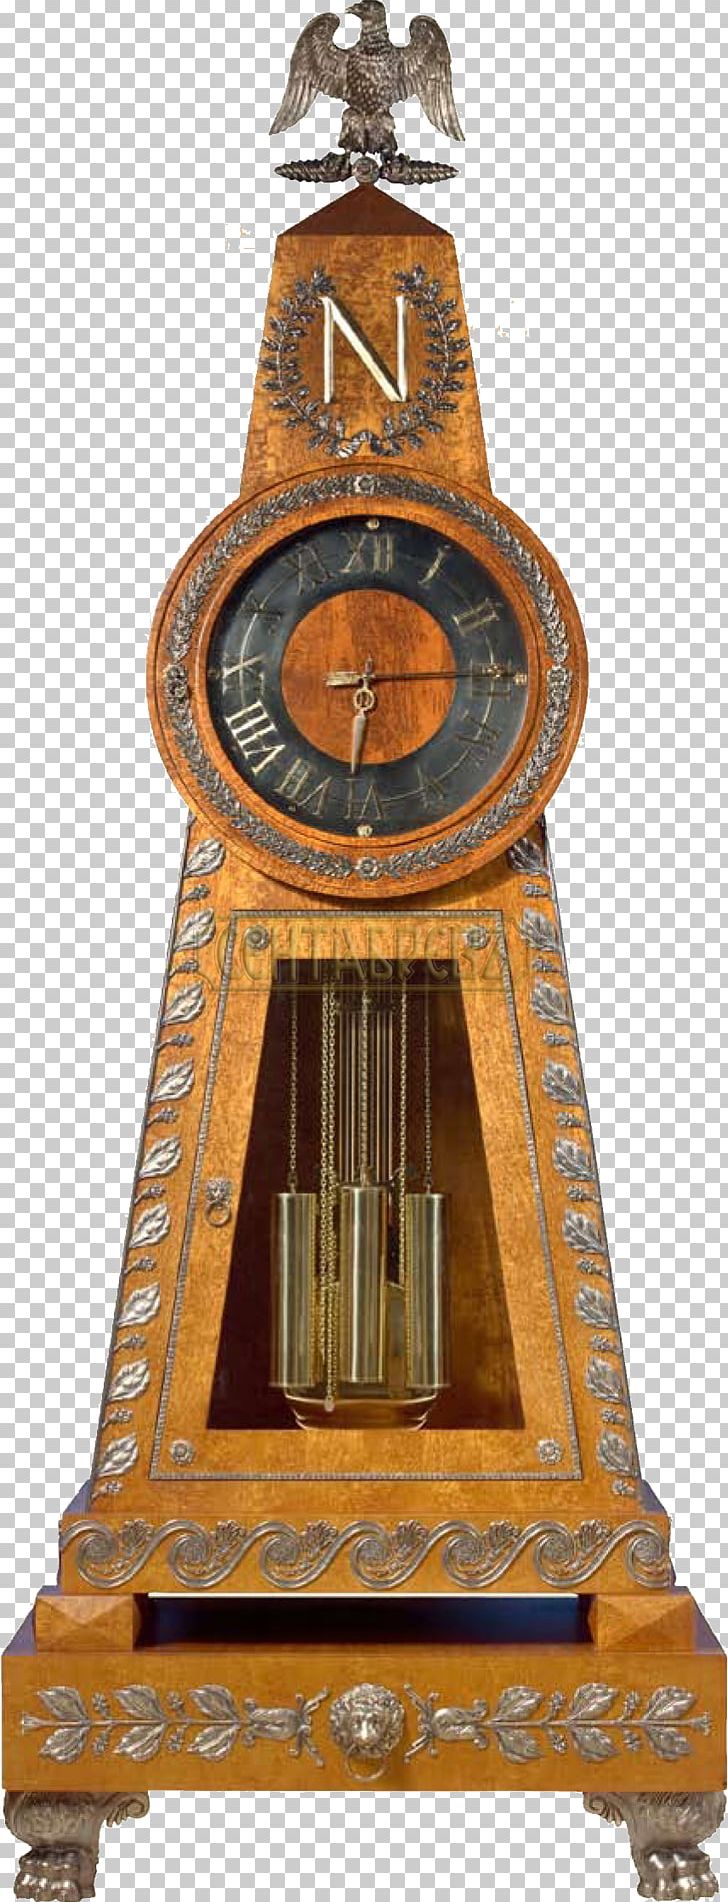 Clock Tower Antique Floor & Grandfather Clocks PNG, Clipart, Antique, Clock, Clock Tower, Floor Grandfather Clocks, Grandfather Free PNG Download